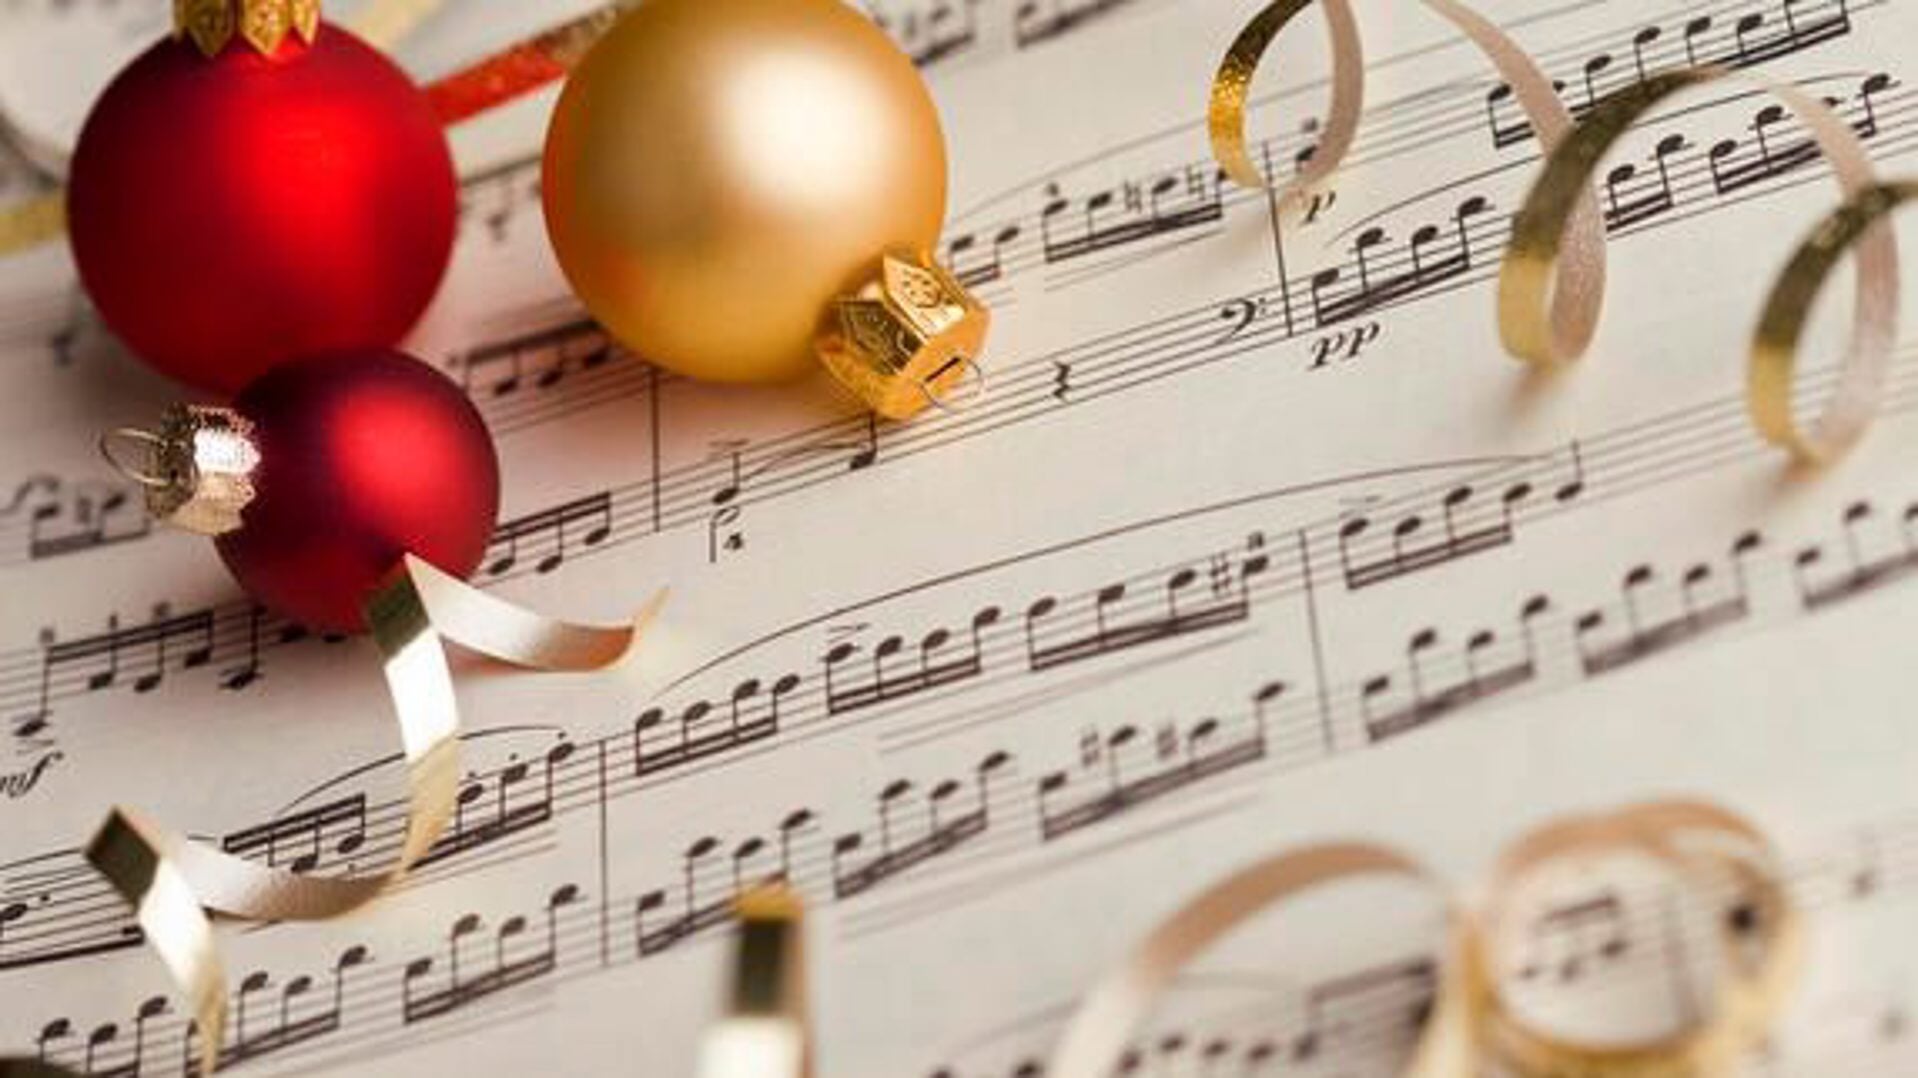 Middelseeuwse muziek in kerstsfeer